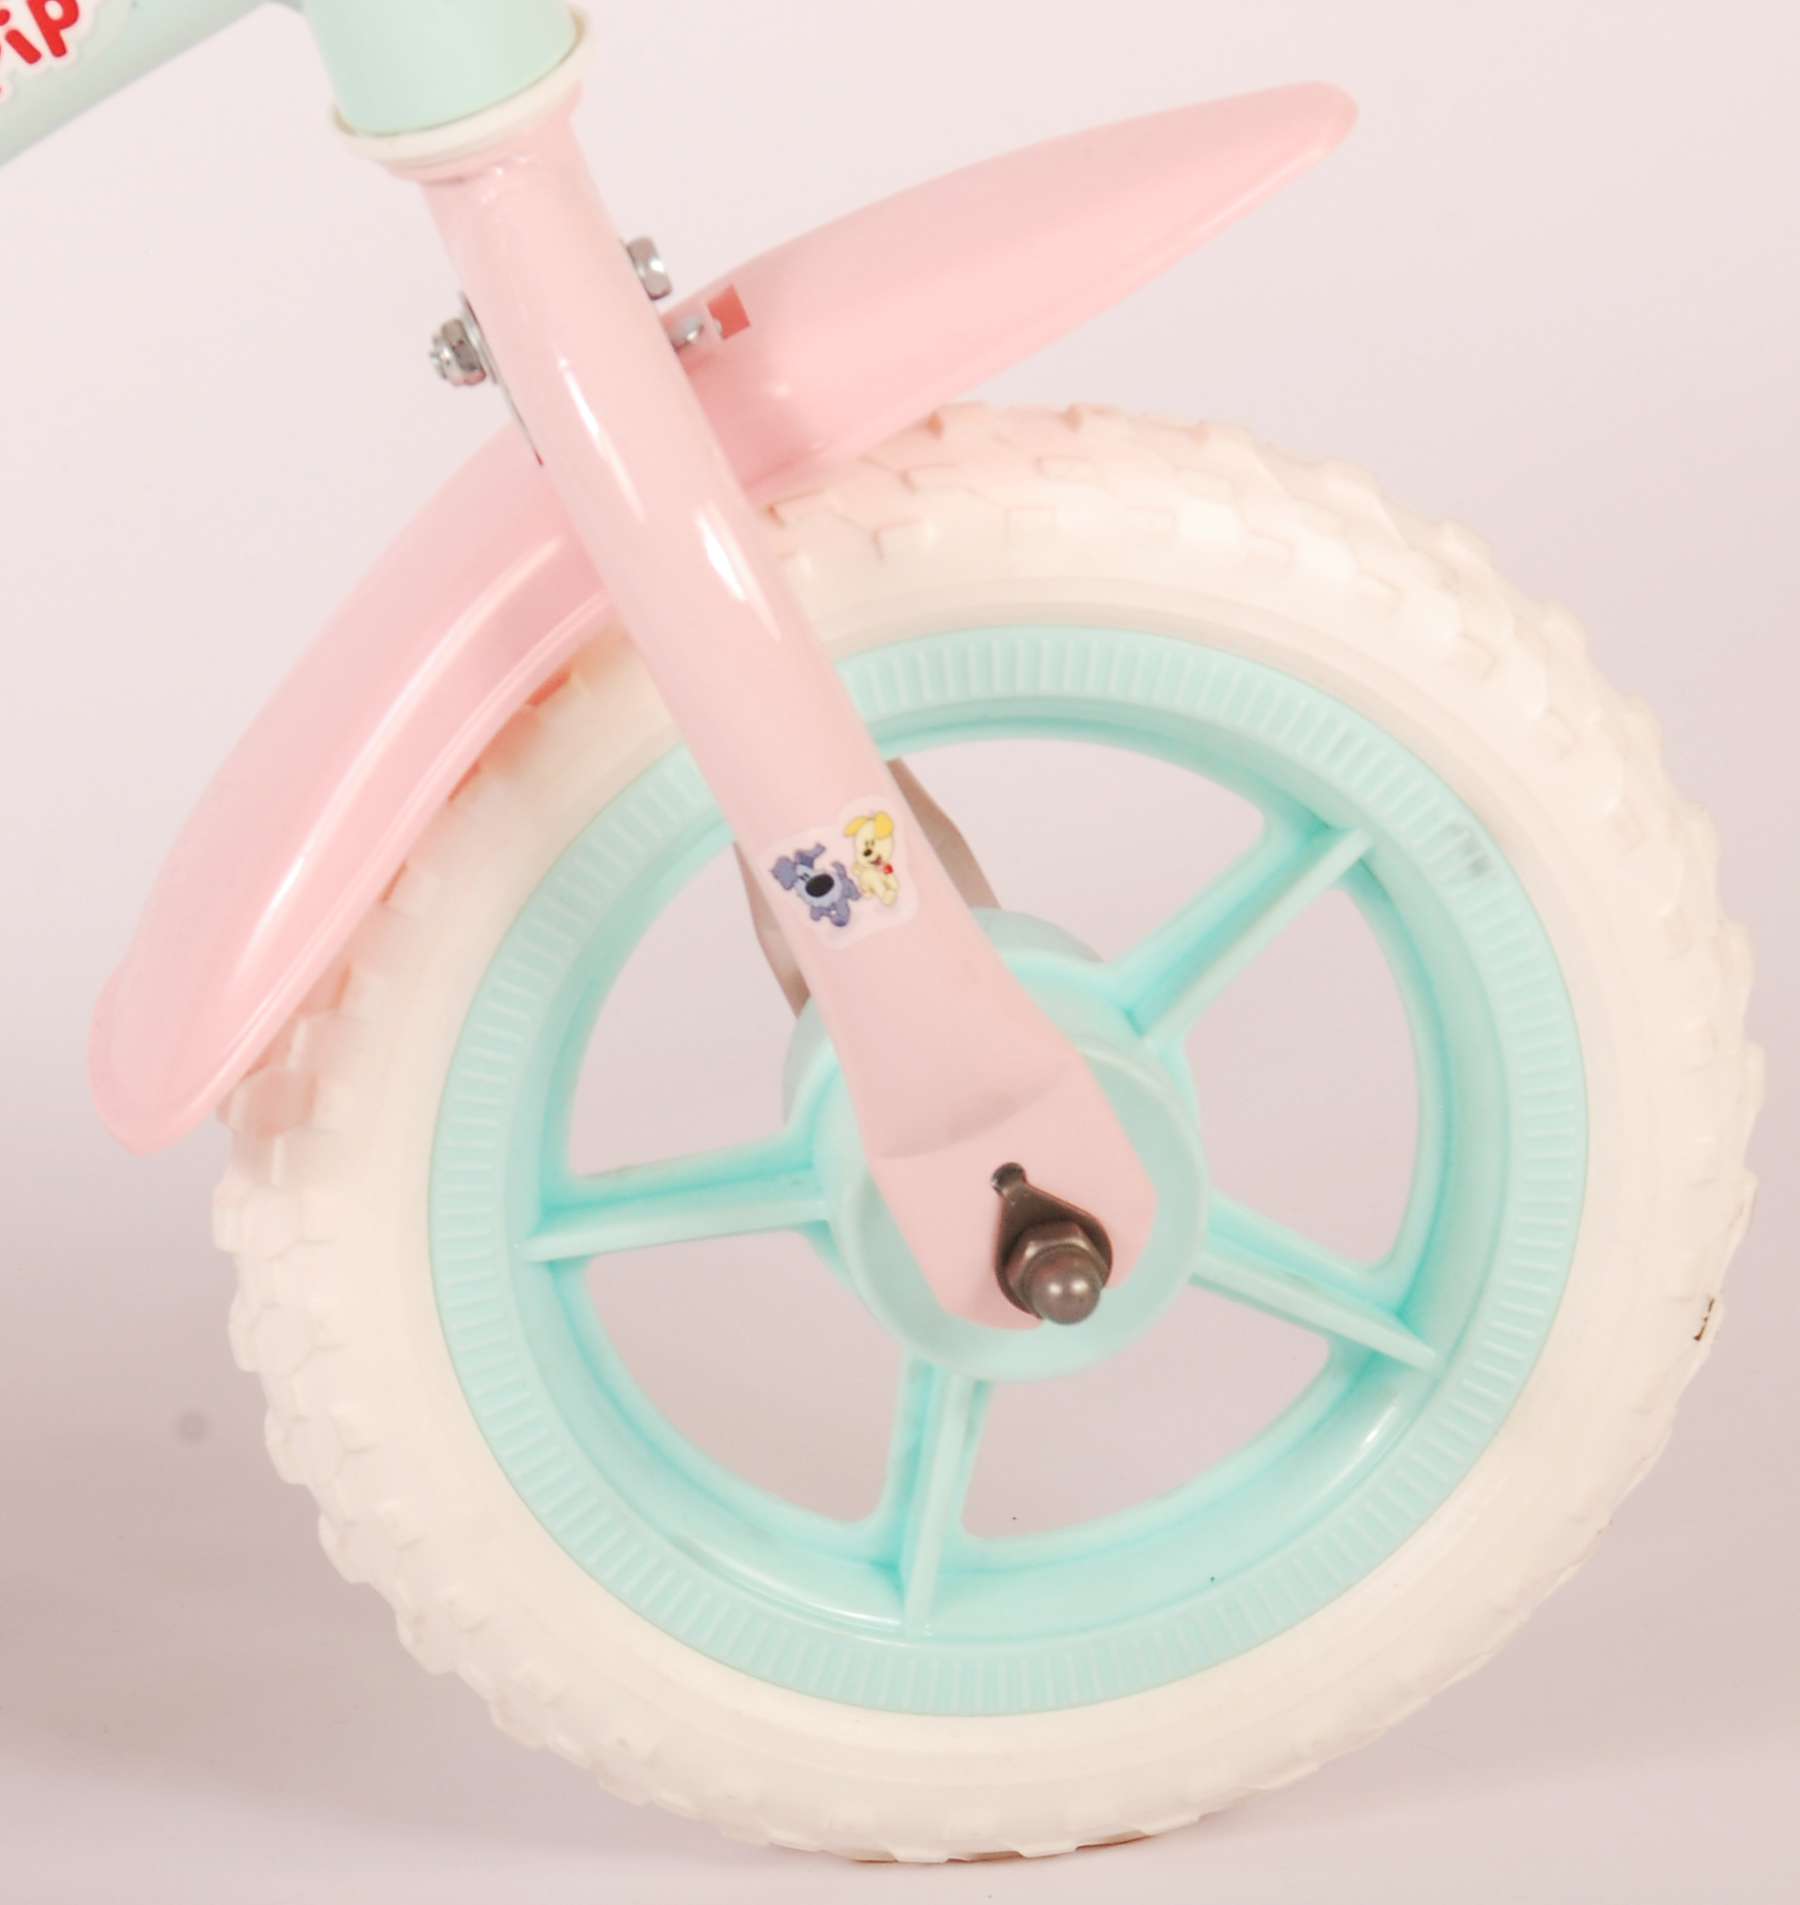 Kinderfahrrad Woezel & Pip für Mädchen 10 Zoll Kinderrad in Mint Blue